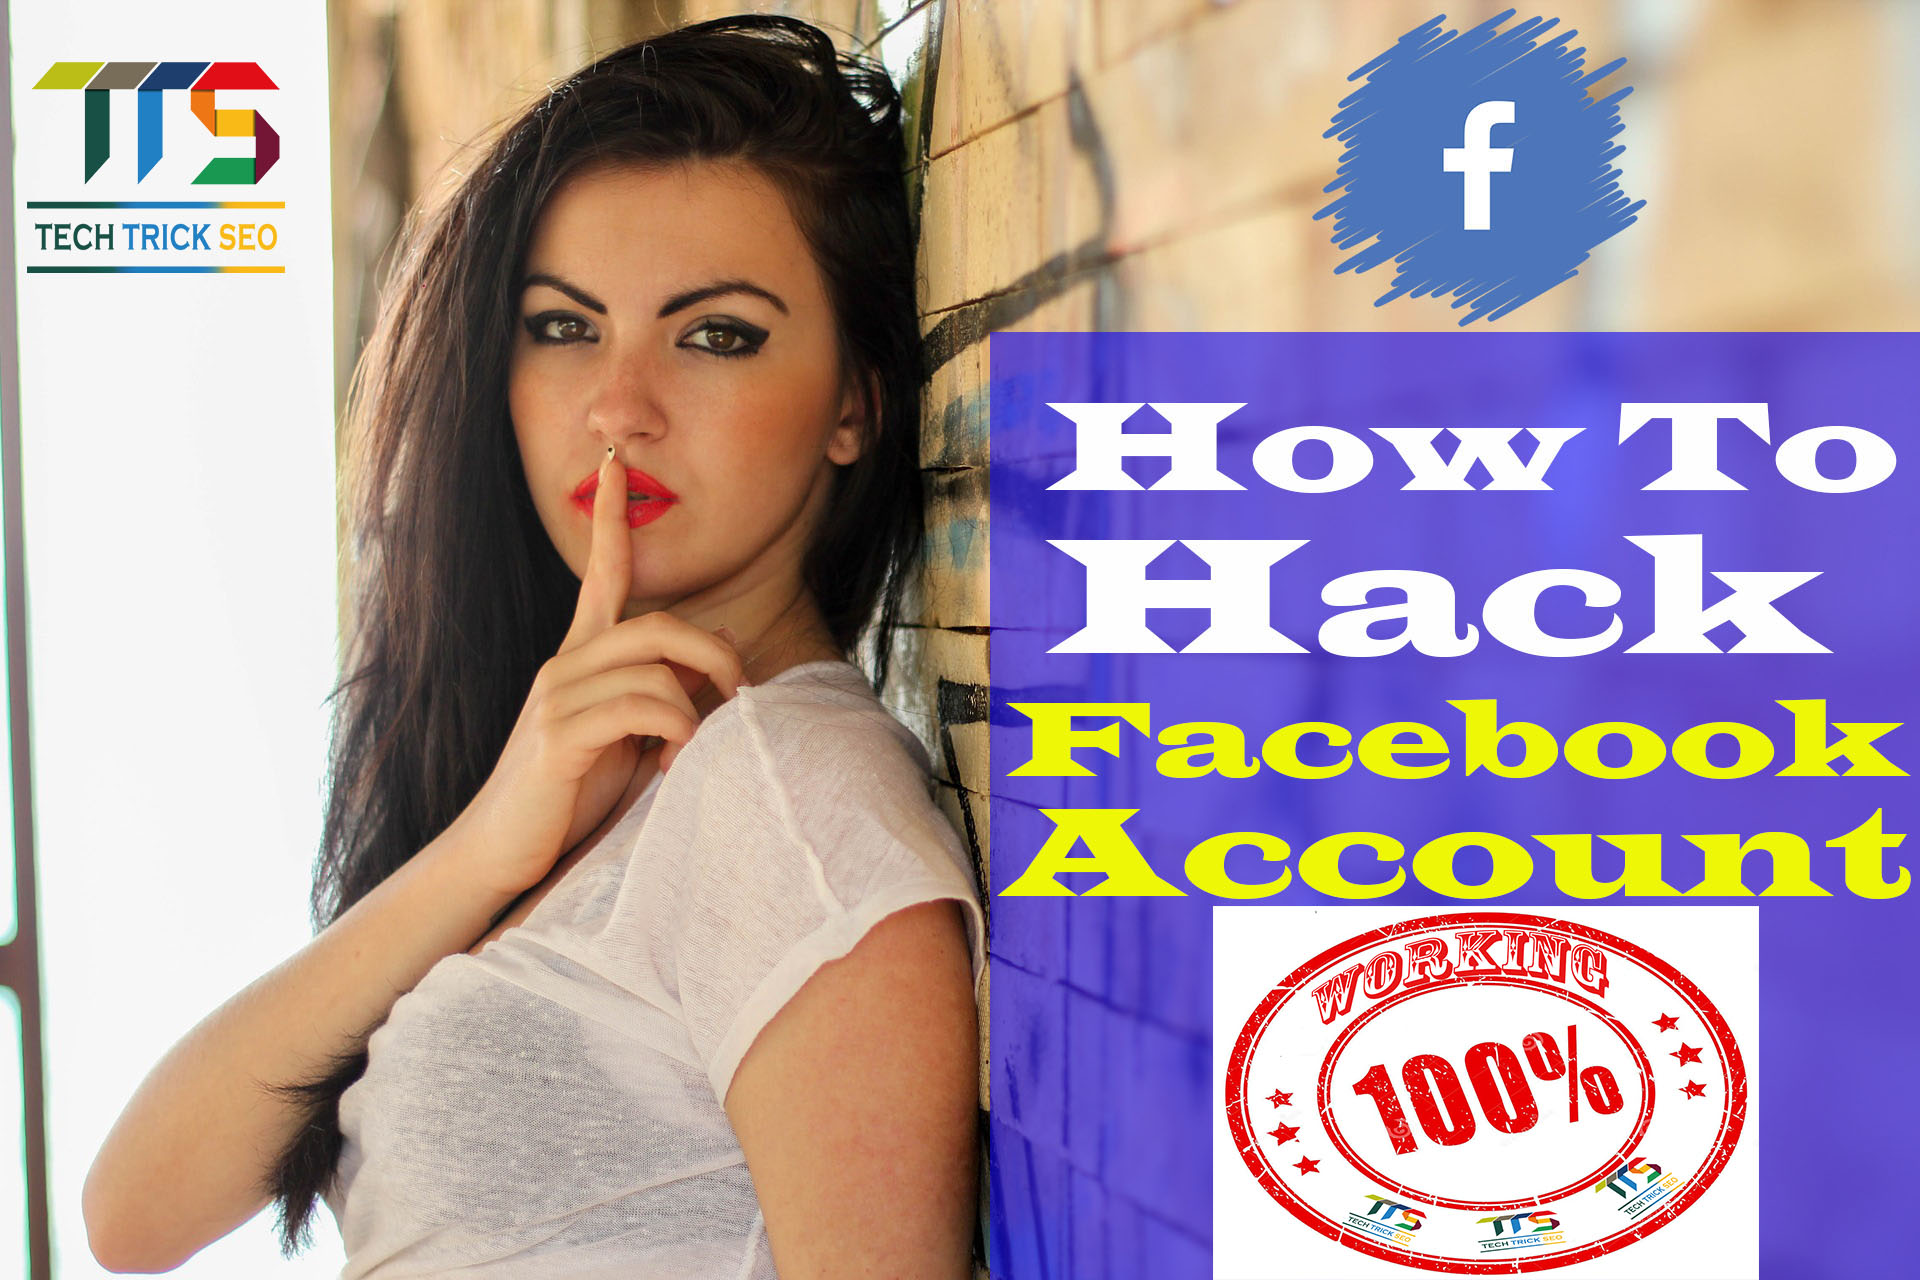 hack facebook account free uk